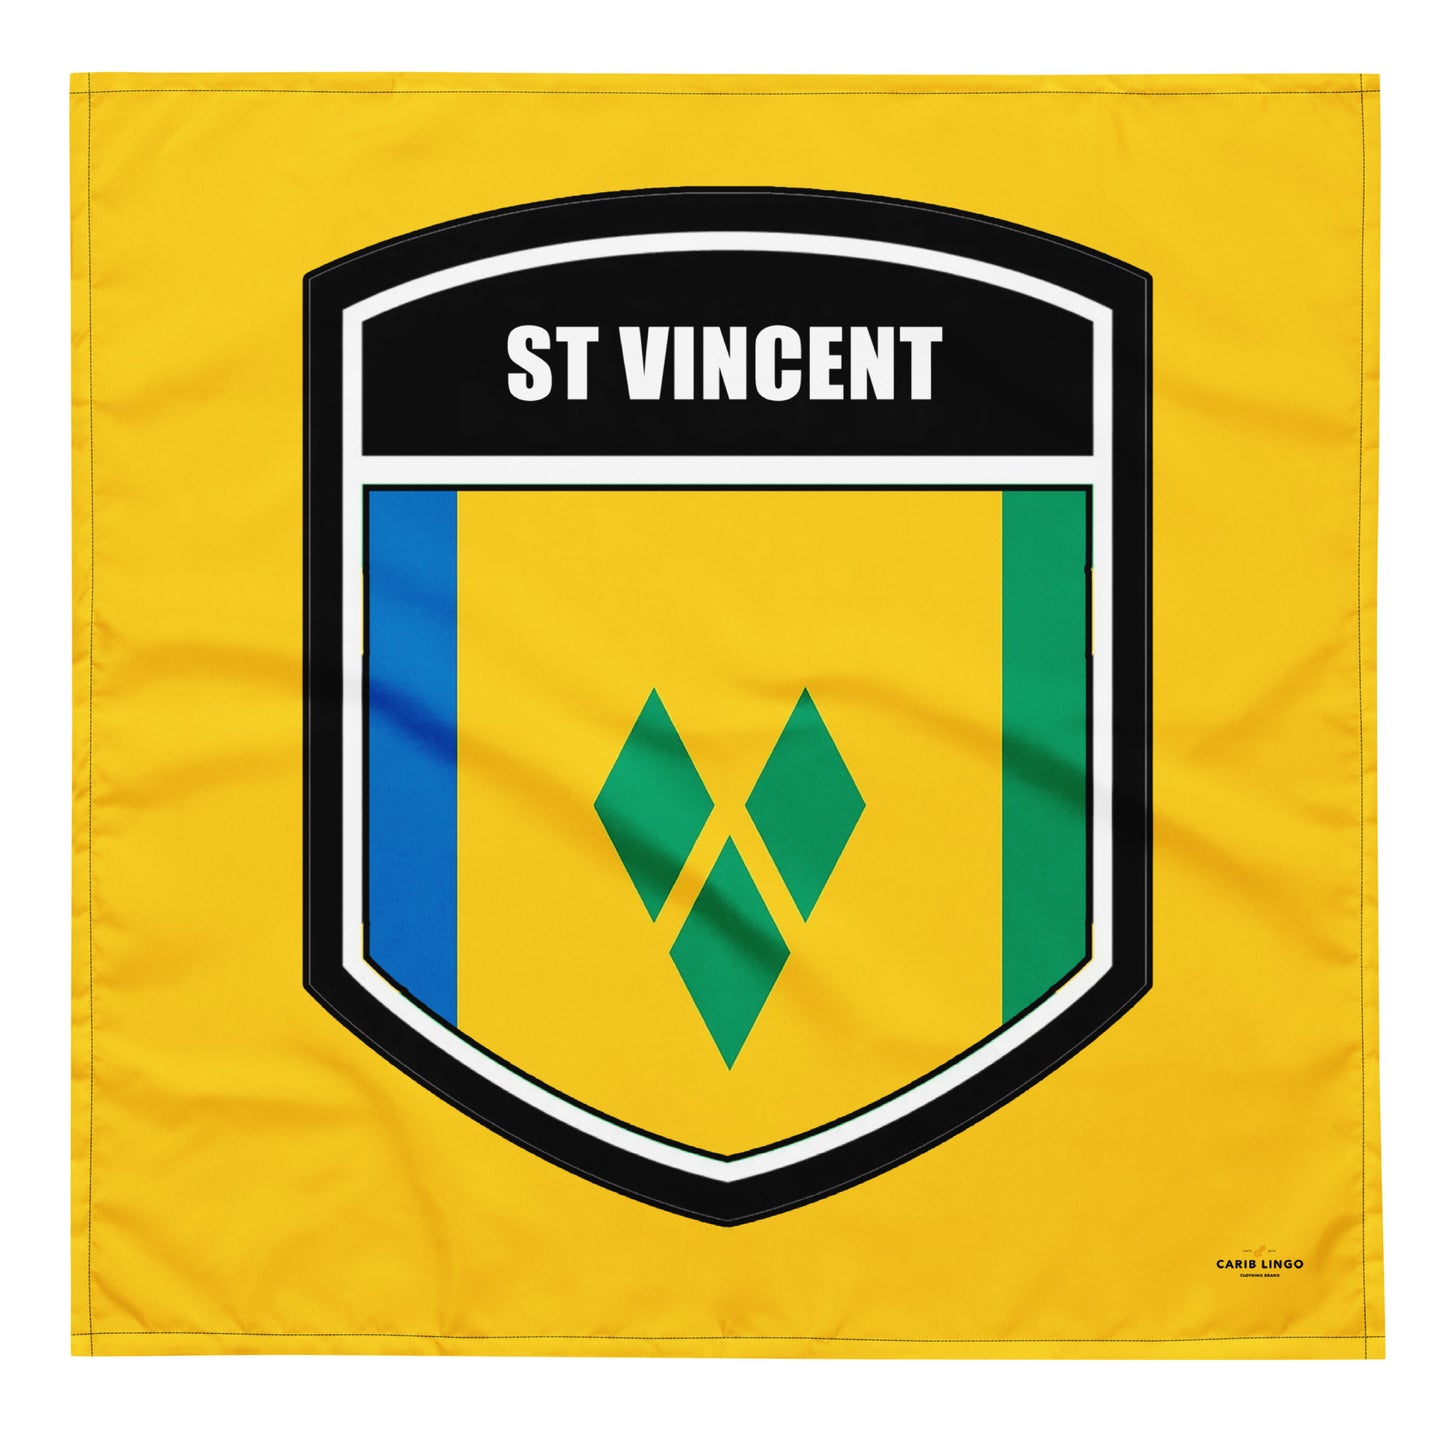 St. Vincent bandana